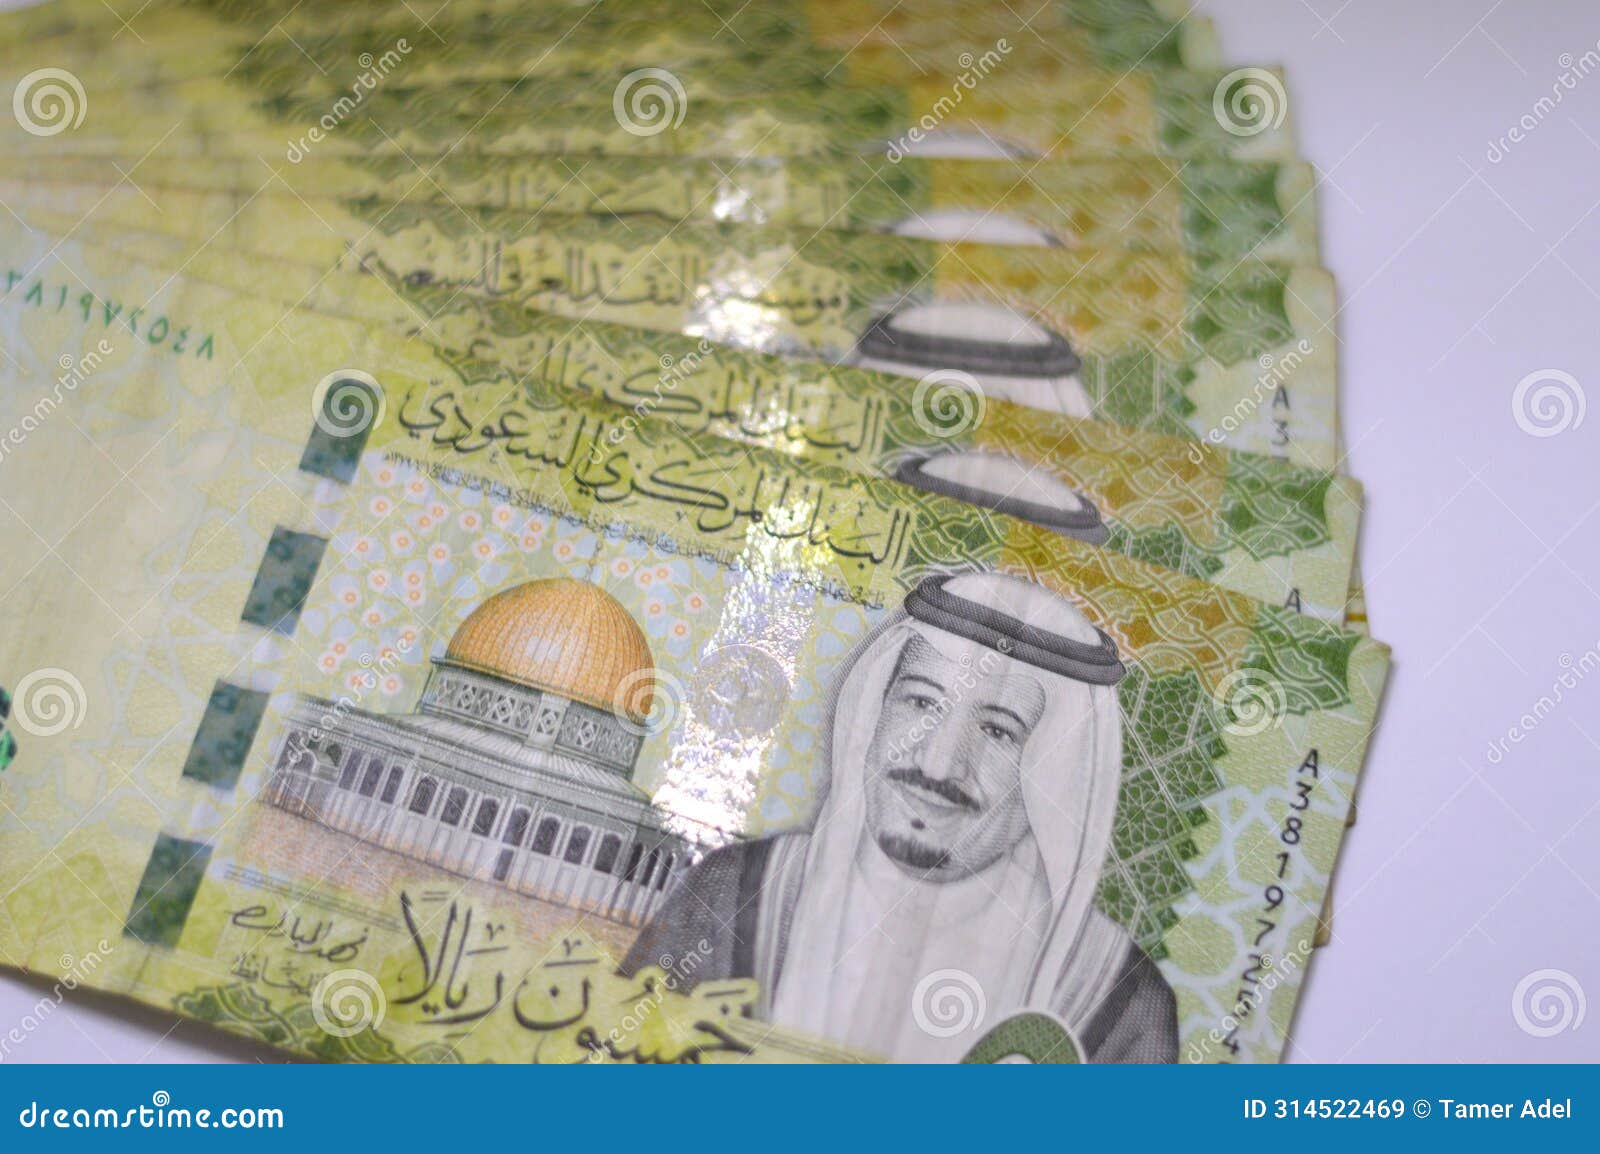 50 fifty saudi riyals banknote features the dome of the rock in jerusalem and portrait of king salman bin abdelaziz al saud and al